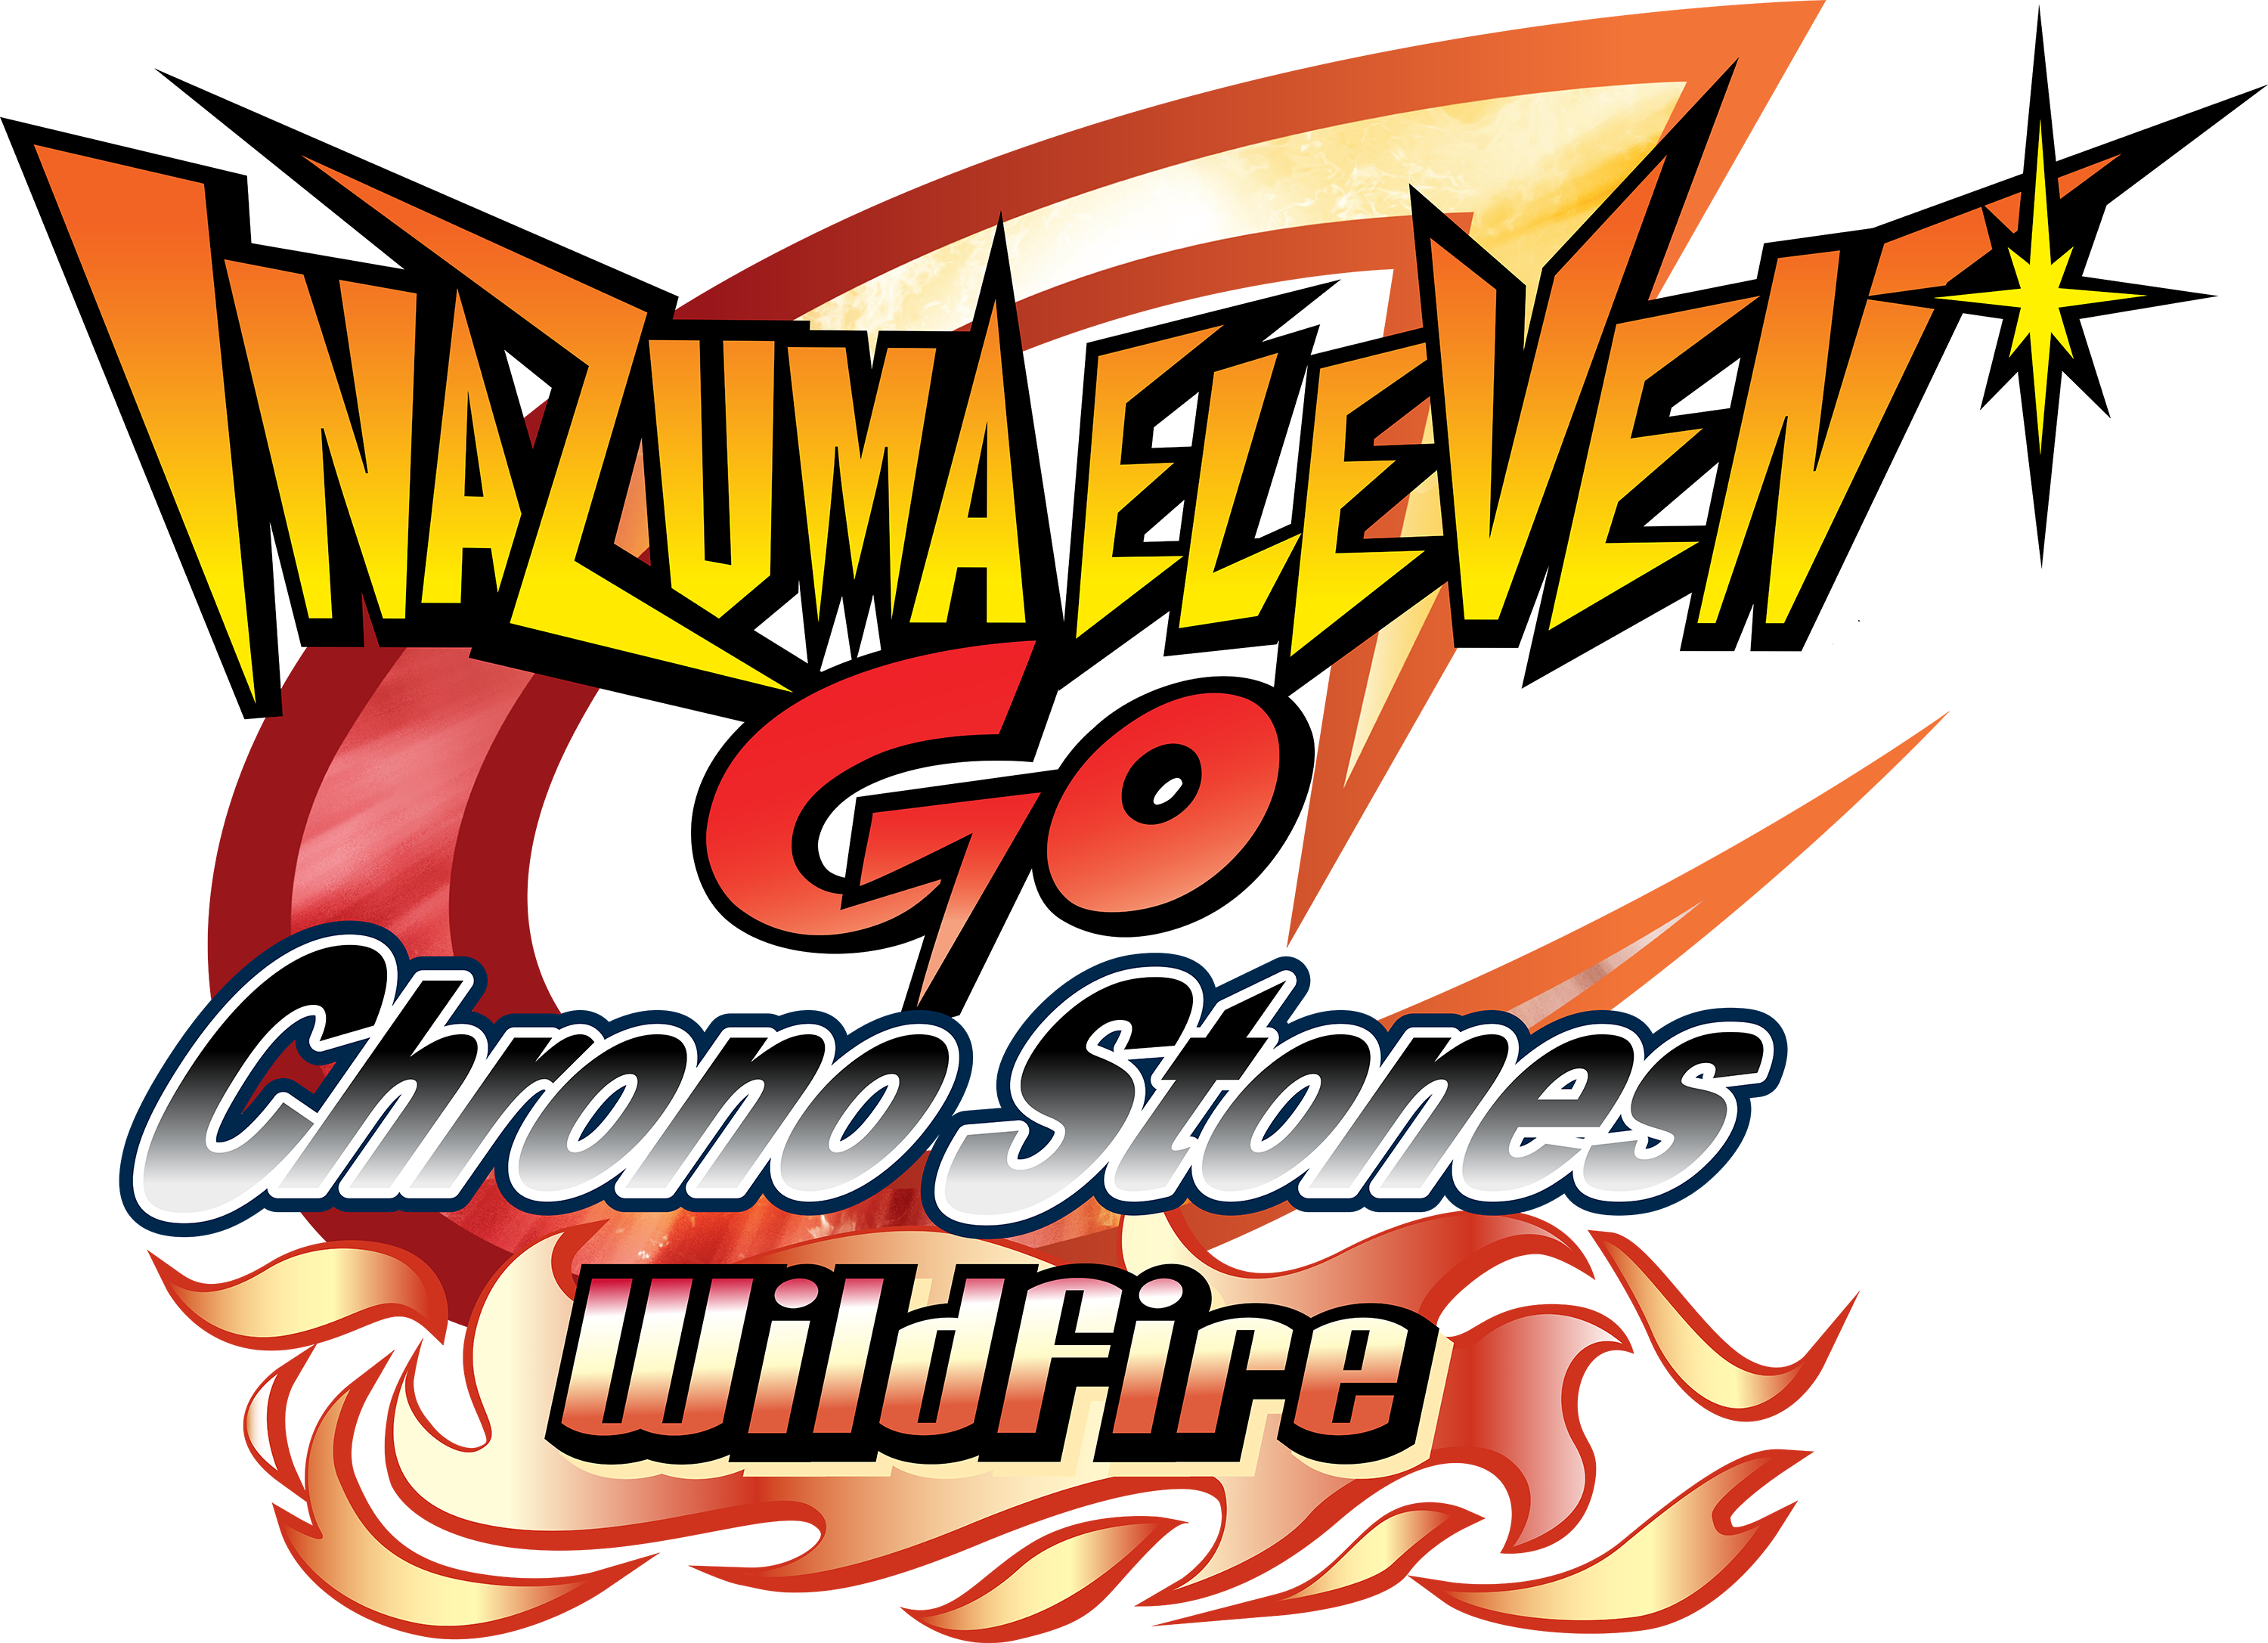 Inazuma Eleven Go Chrono Stones: Wildfire Images - LaunchBox Games